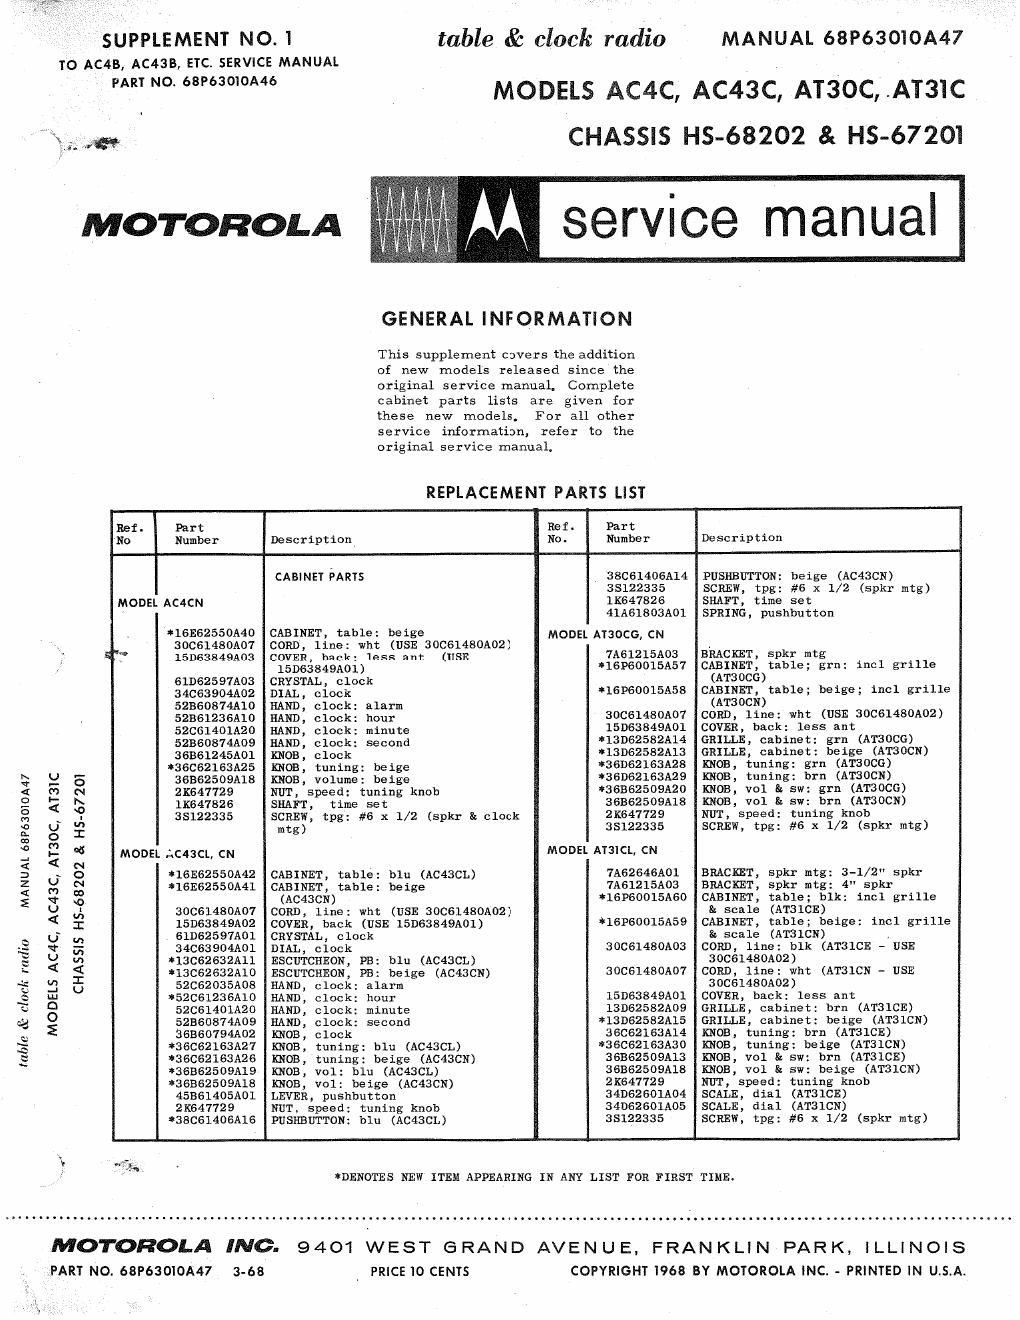 motorola at 30 31 c service manual